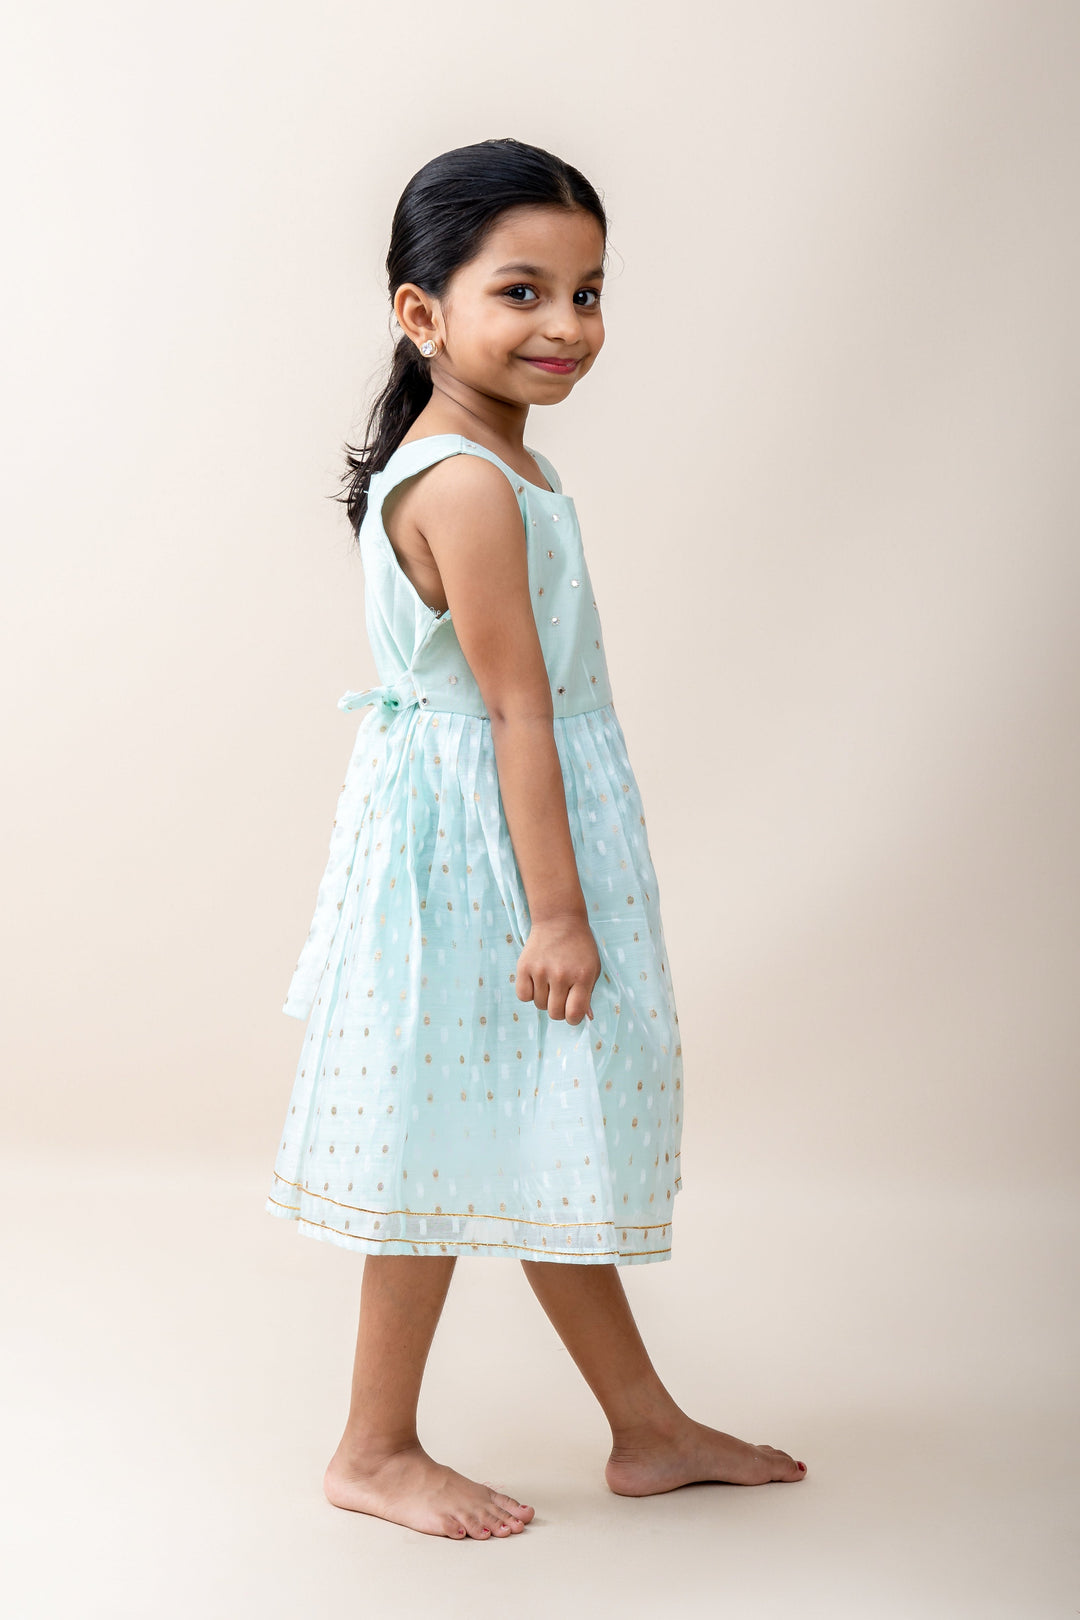 The Nesavu Frocks & Dresses Sky Blue Designer Chanderi Silk Cotton Gown With Embellishments For Girls psr silks Nesavu